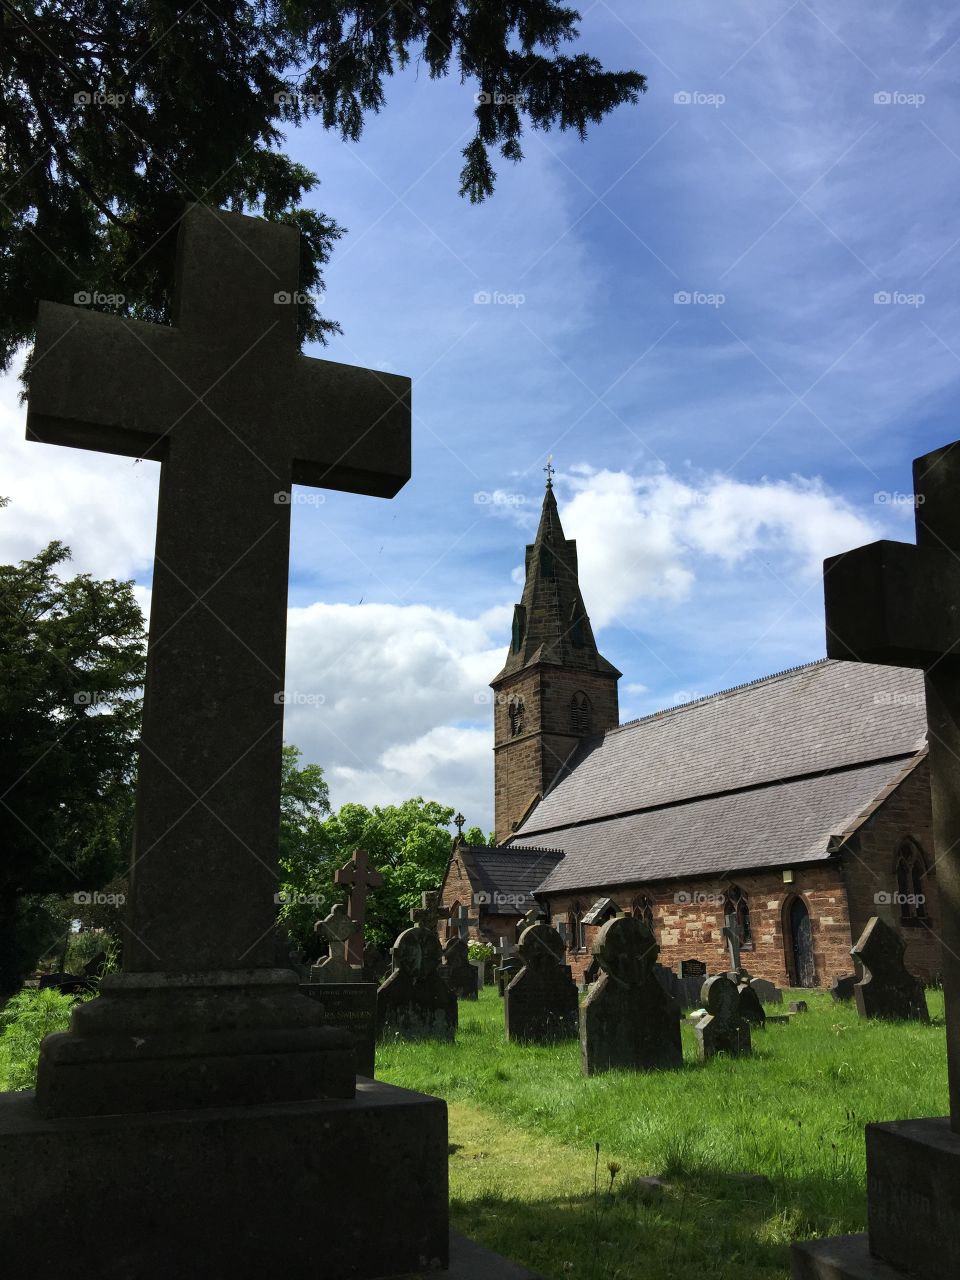 Cemetery, Religion, Grave, Church, Cross